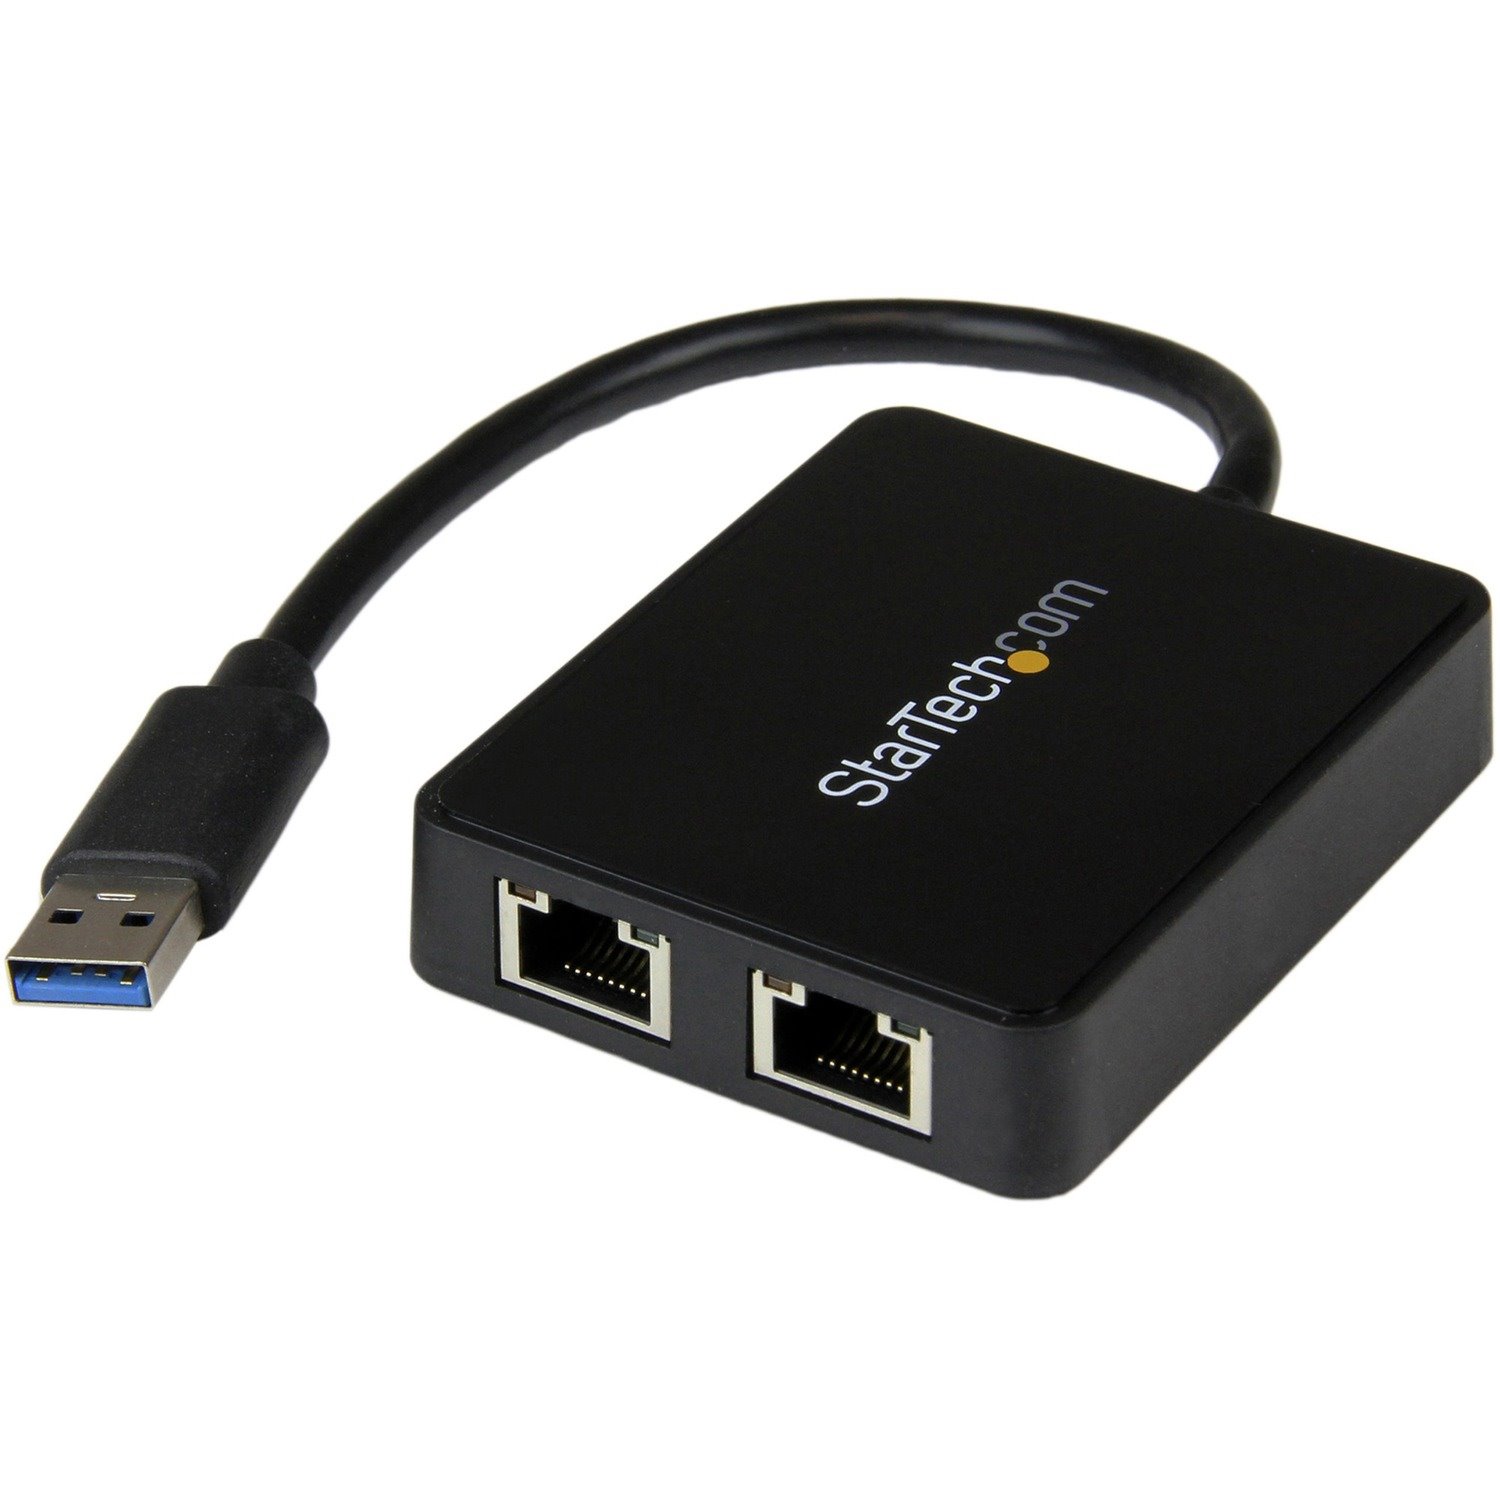 StarTech.com Gigabit Ethernet Card for PC - 10/100/1000Base-T - Desktop